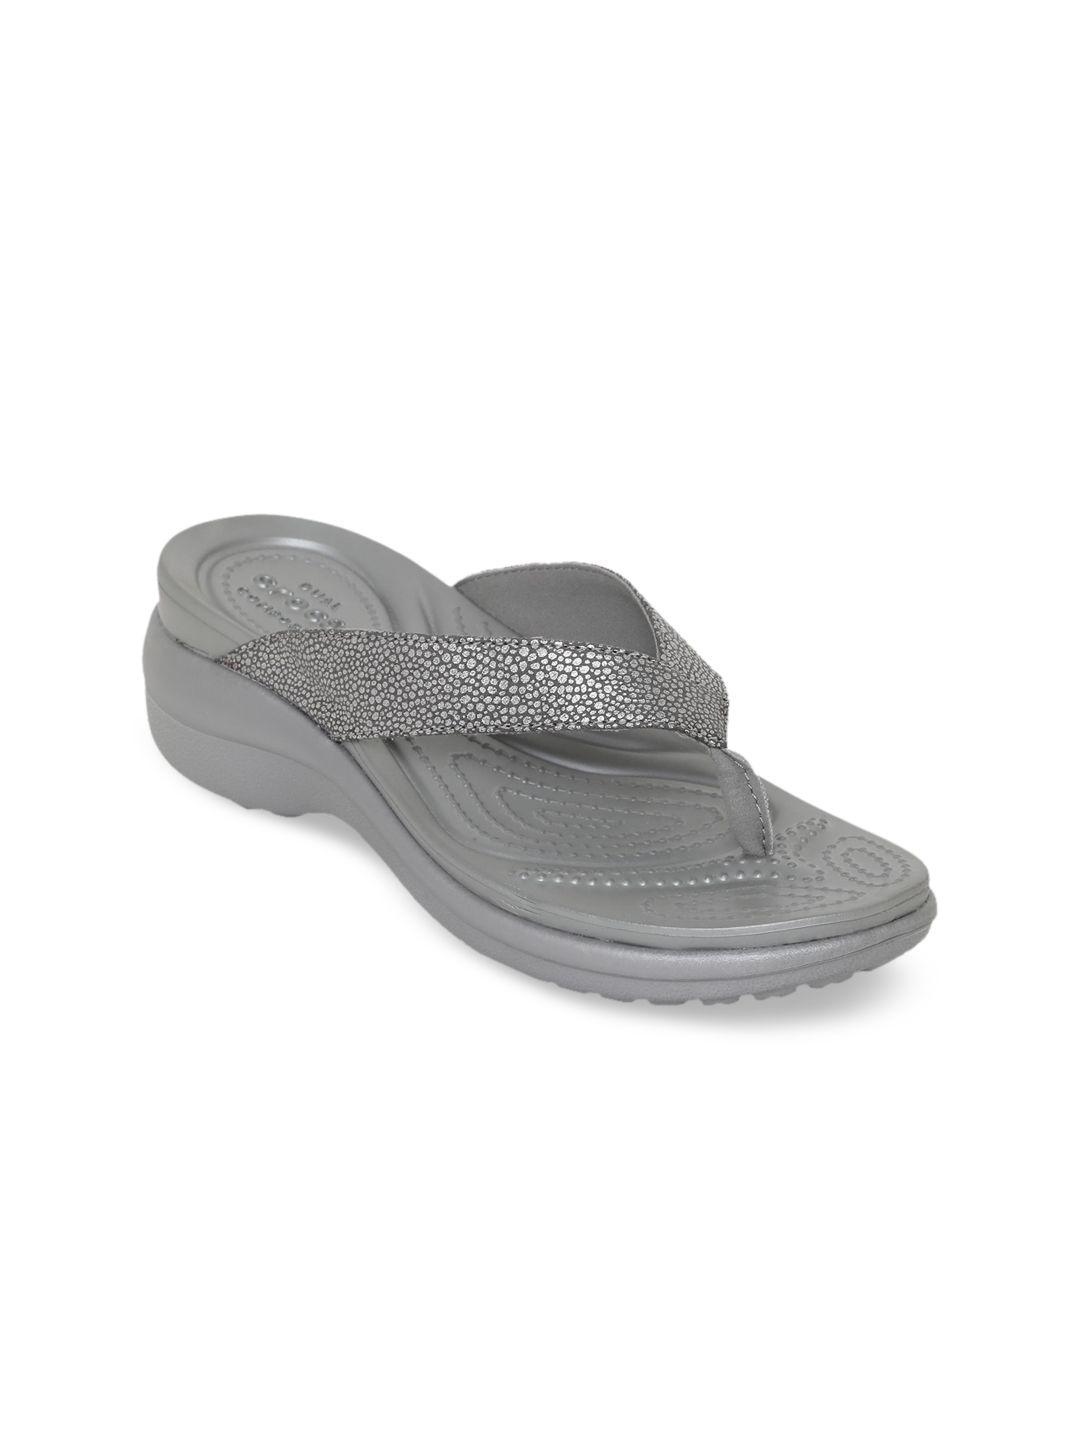 crocs capri  women grey woven design sandals